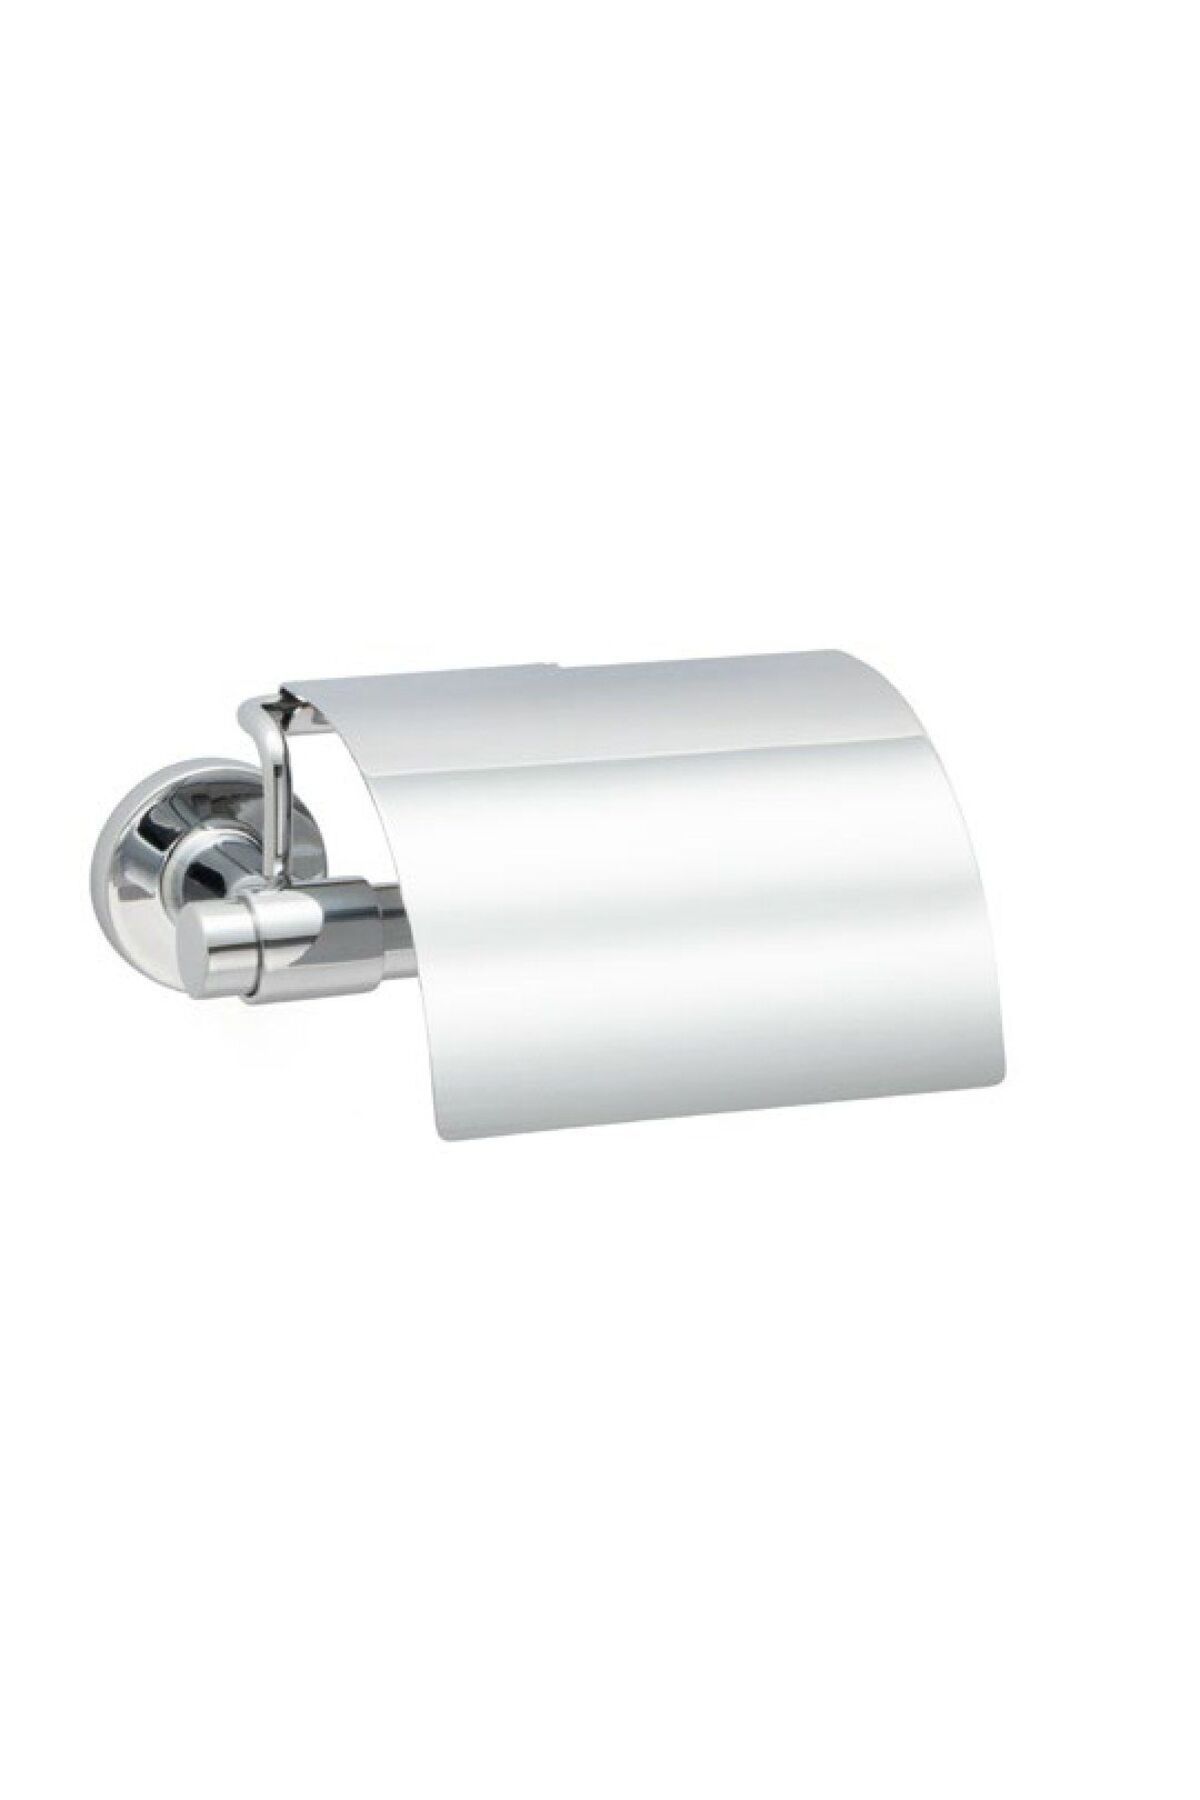 Flex Kapaklı Tuvalet Kağıtlığı Krom Renk 81X107X158 mm